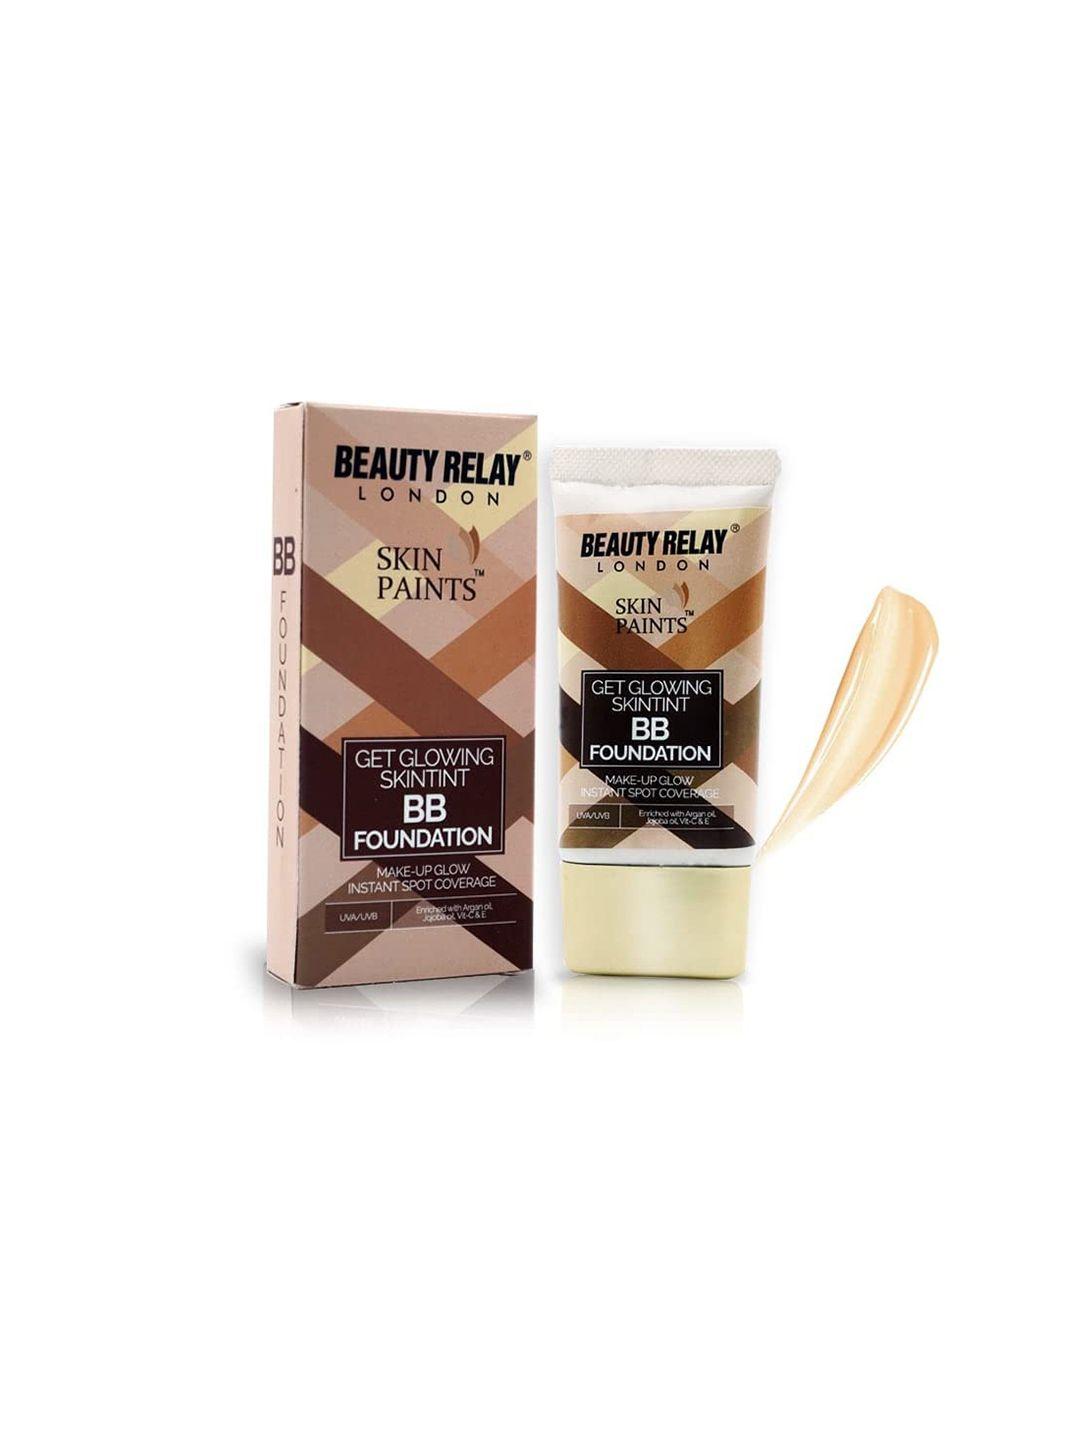 beautyrelay london skin paints get glowing skintint bb foundation 30g - warm nude 128